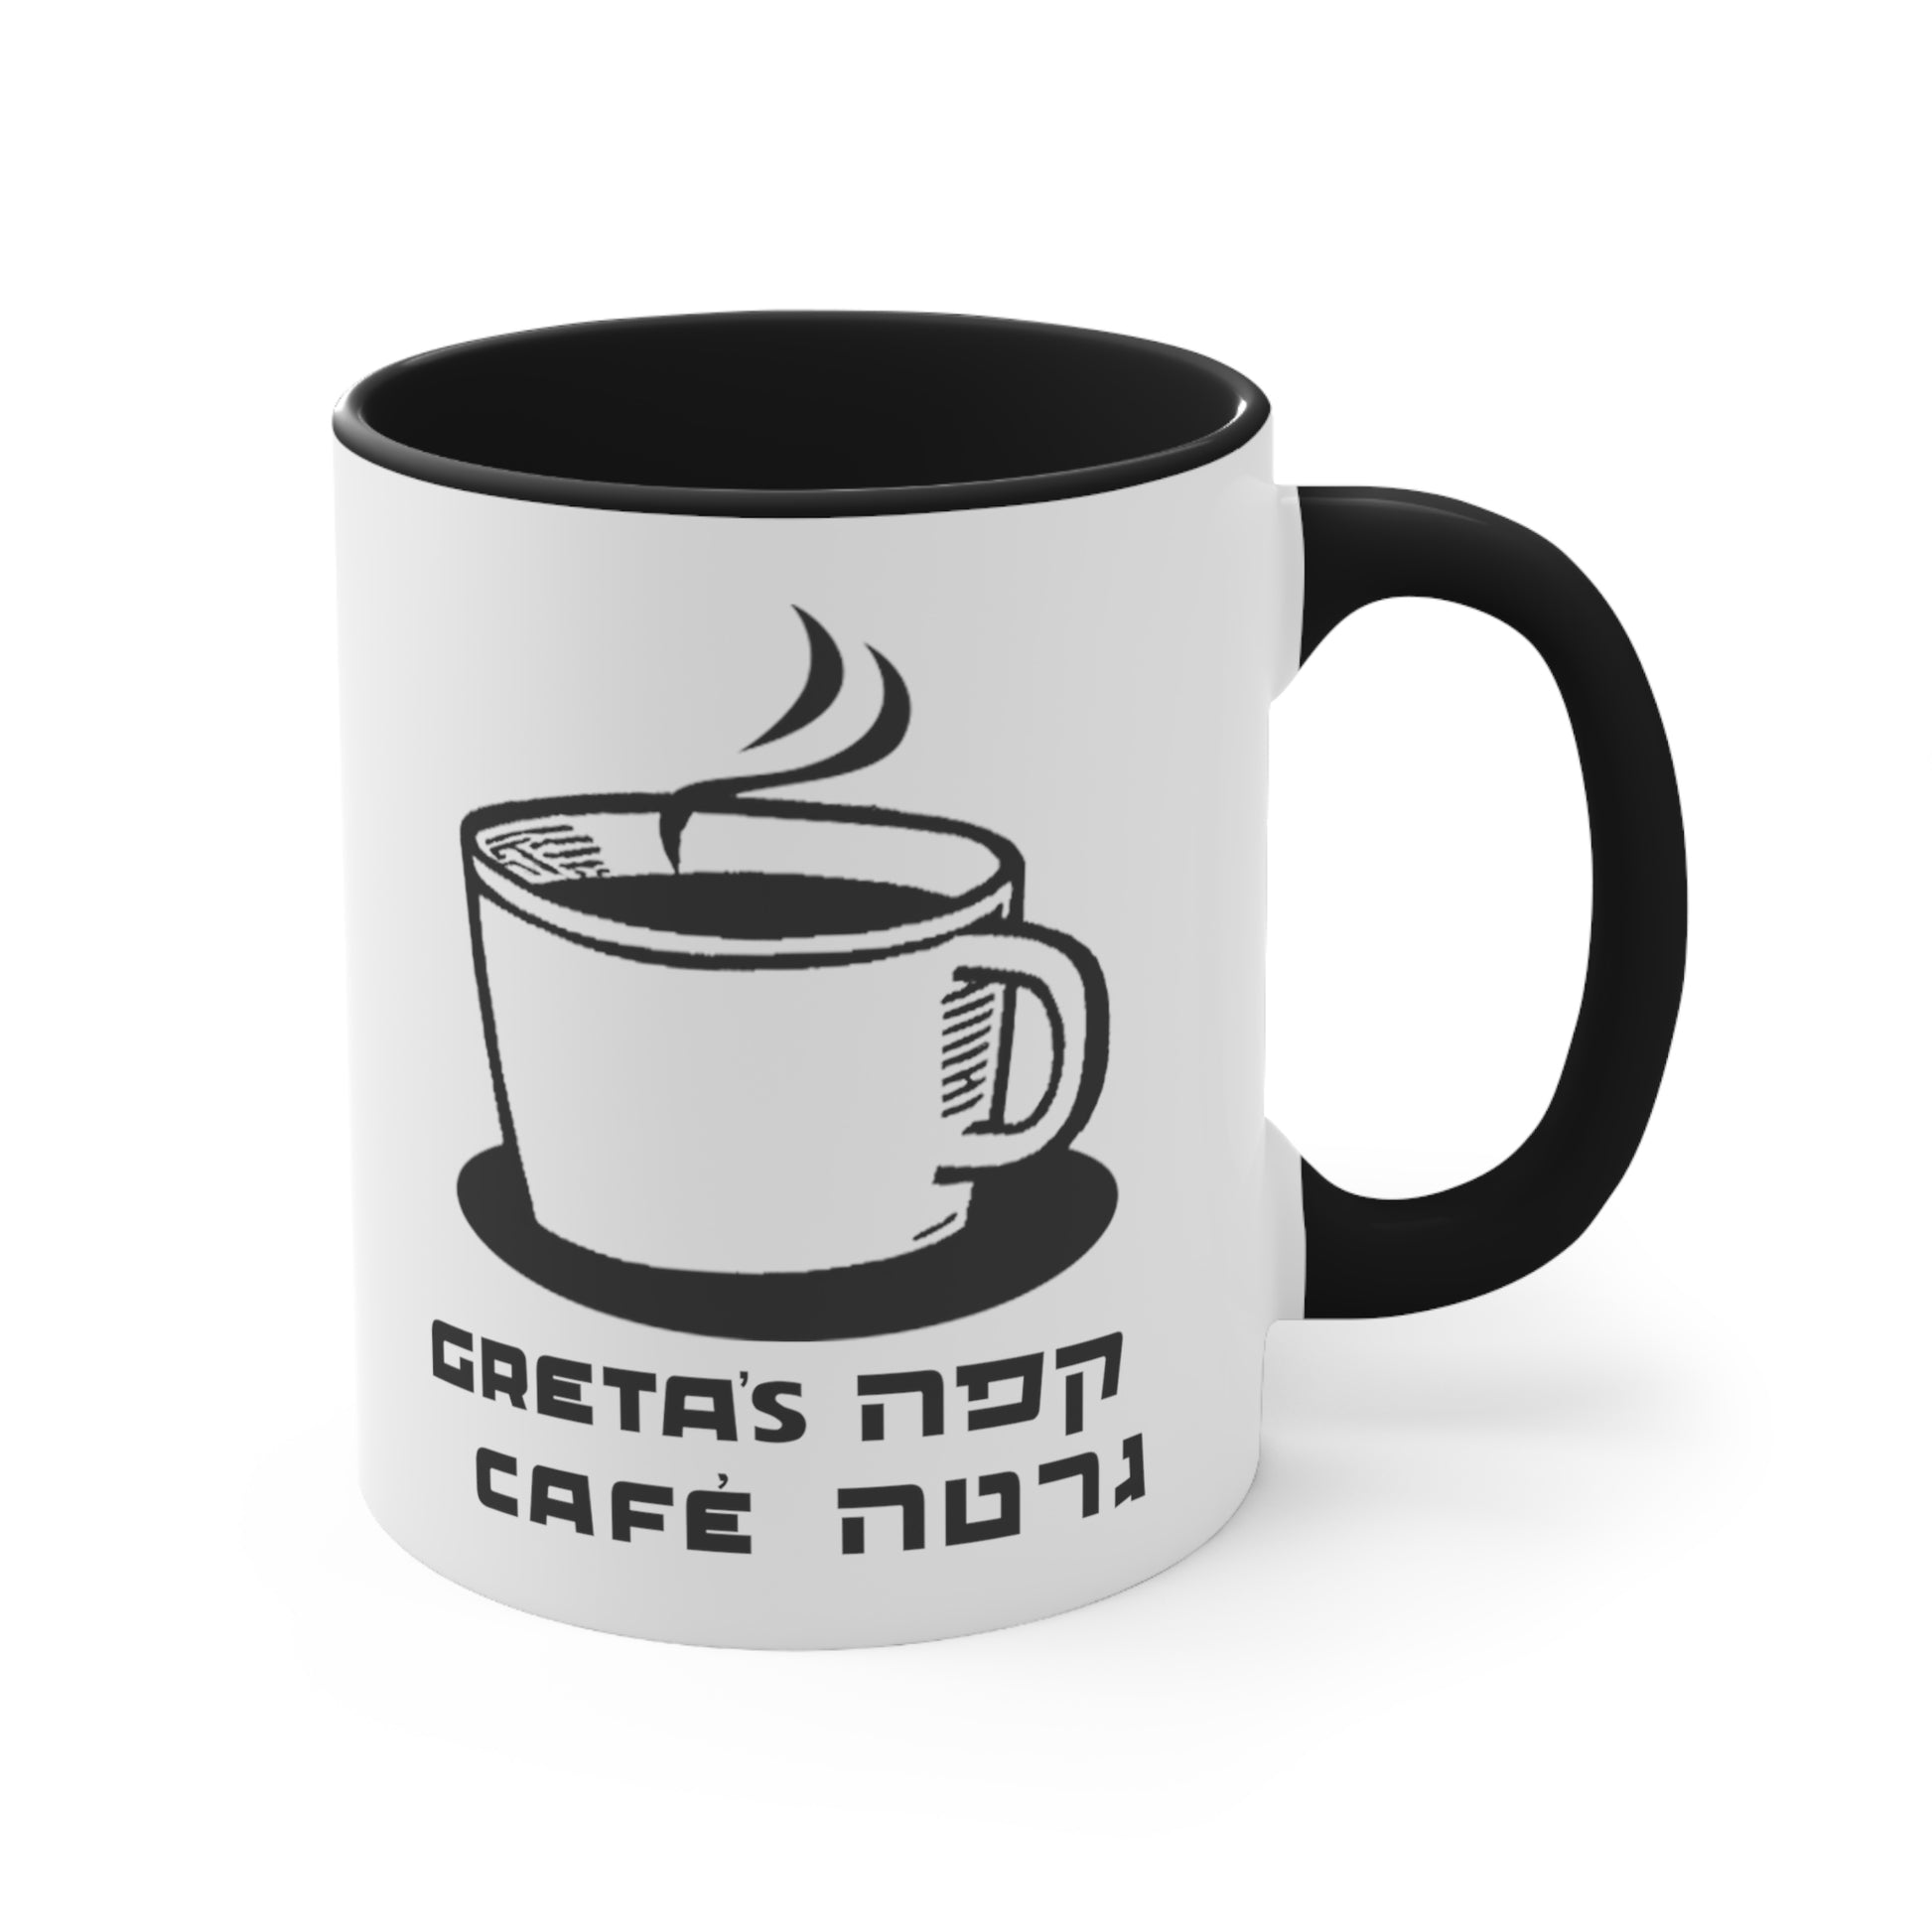 Greta's Cafe Accented Mug - black